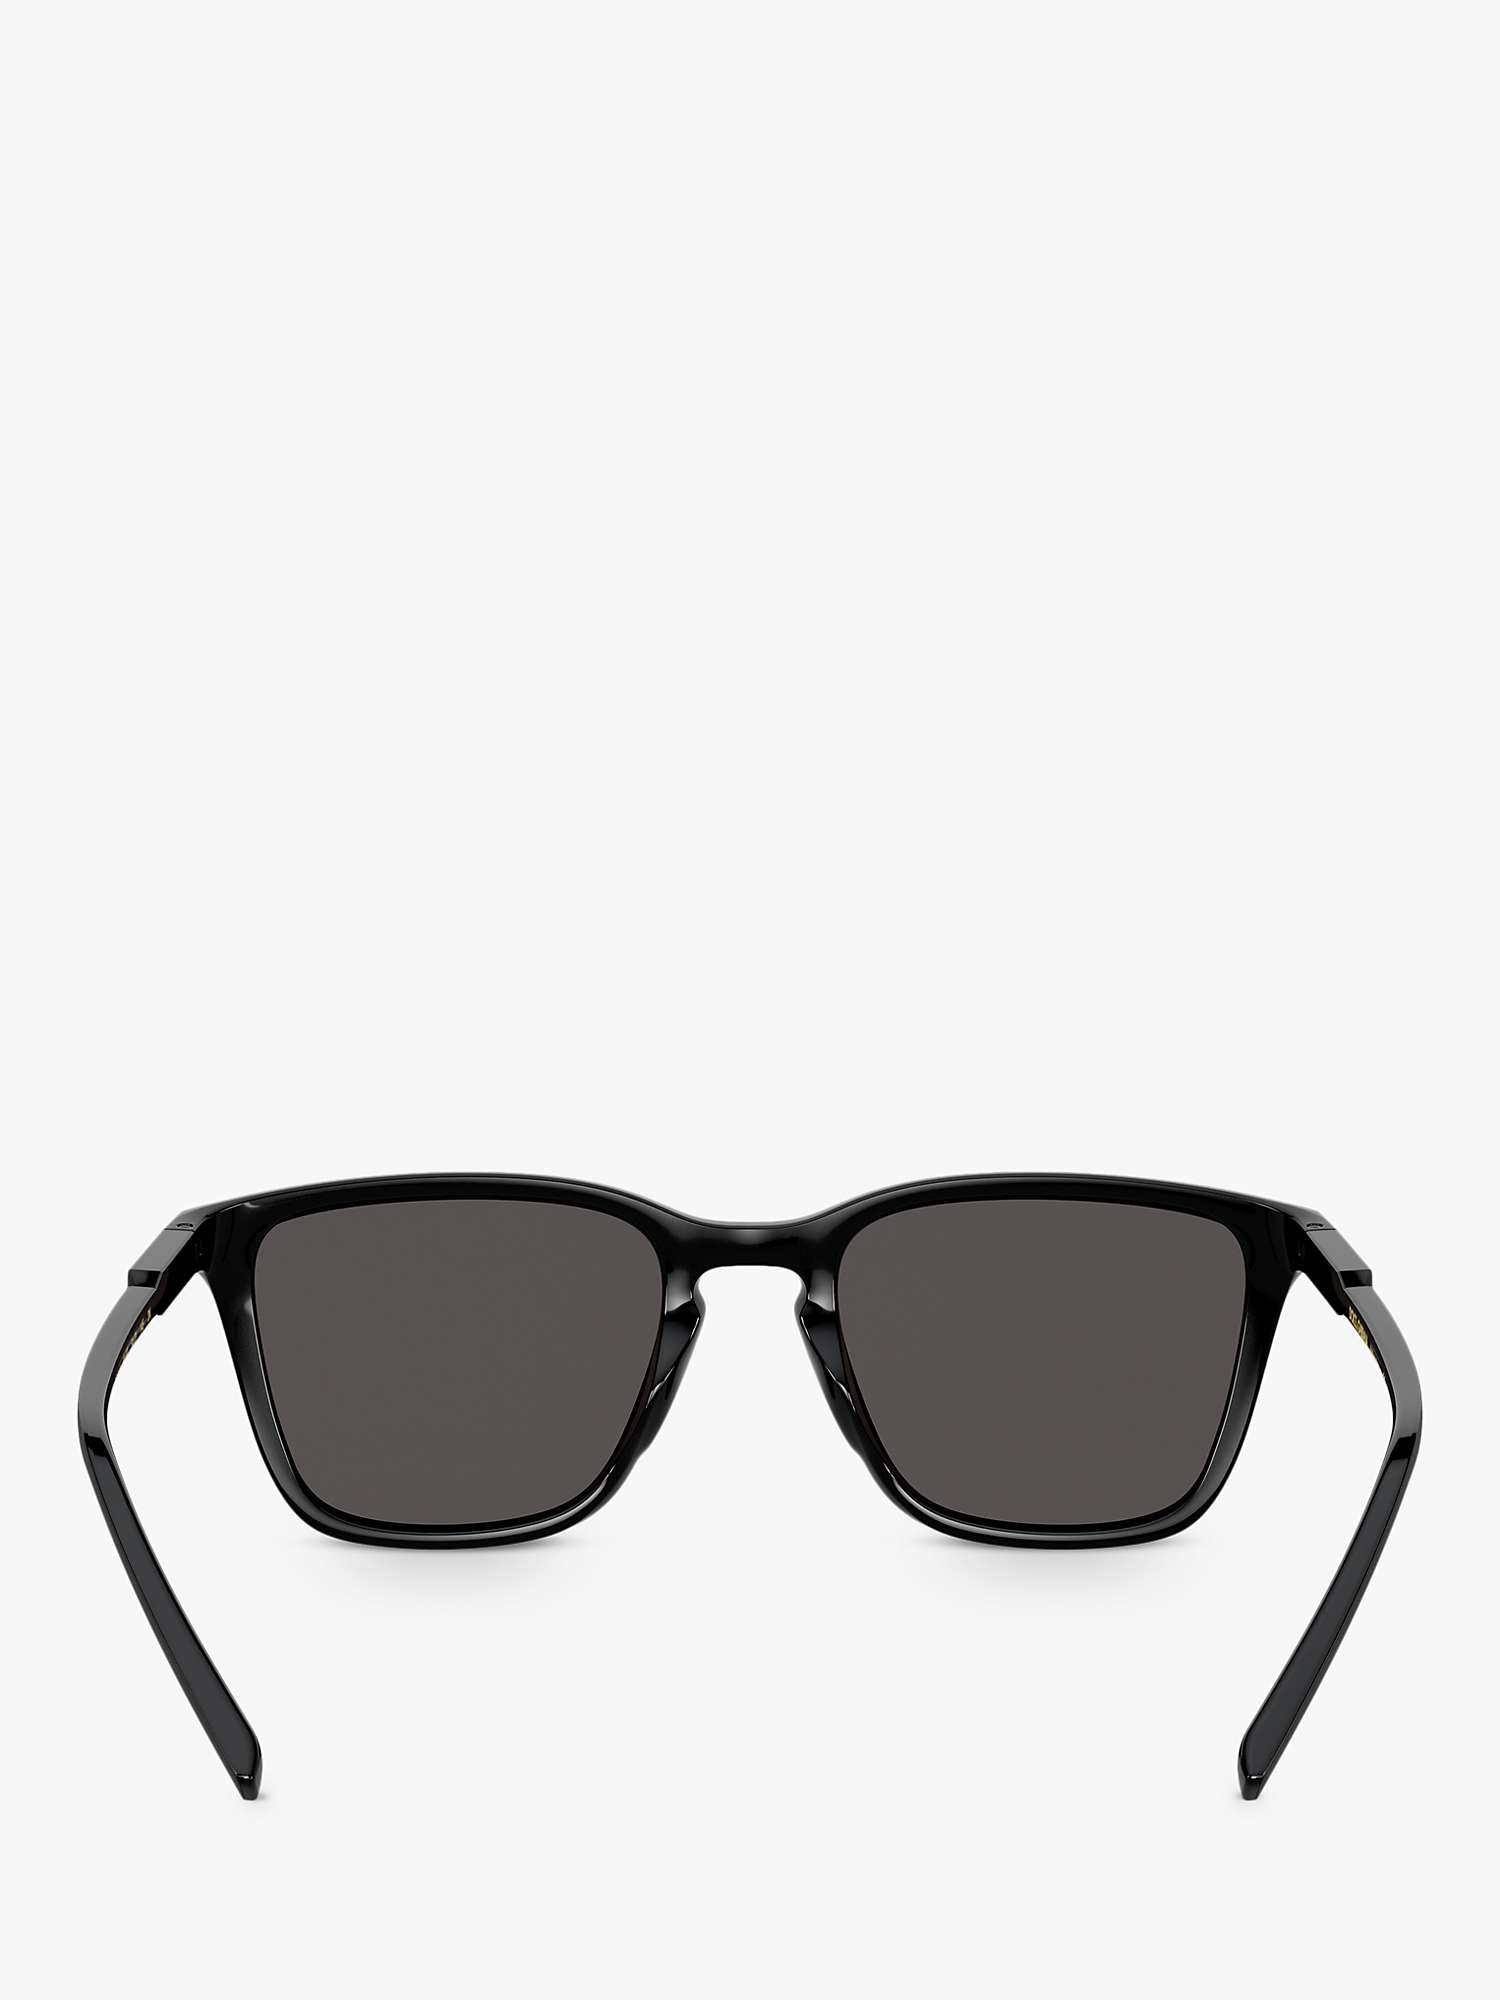 Buy Dolce & Gabbana DG6145 Men's Square Sunglasses Online at johnlewis.com